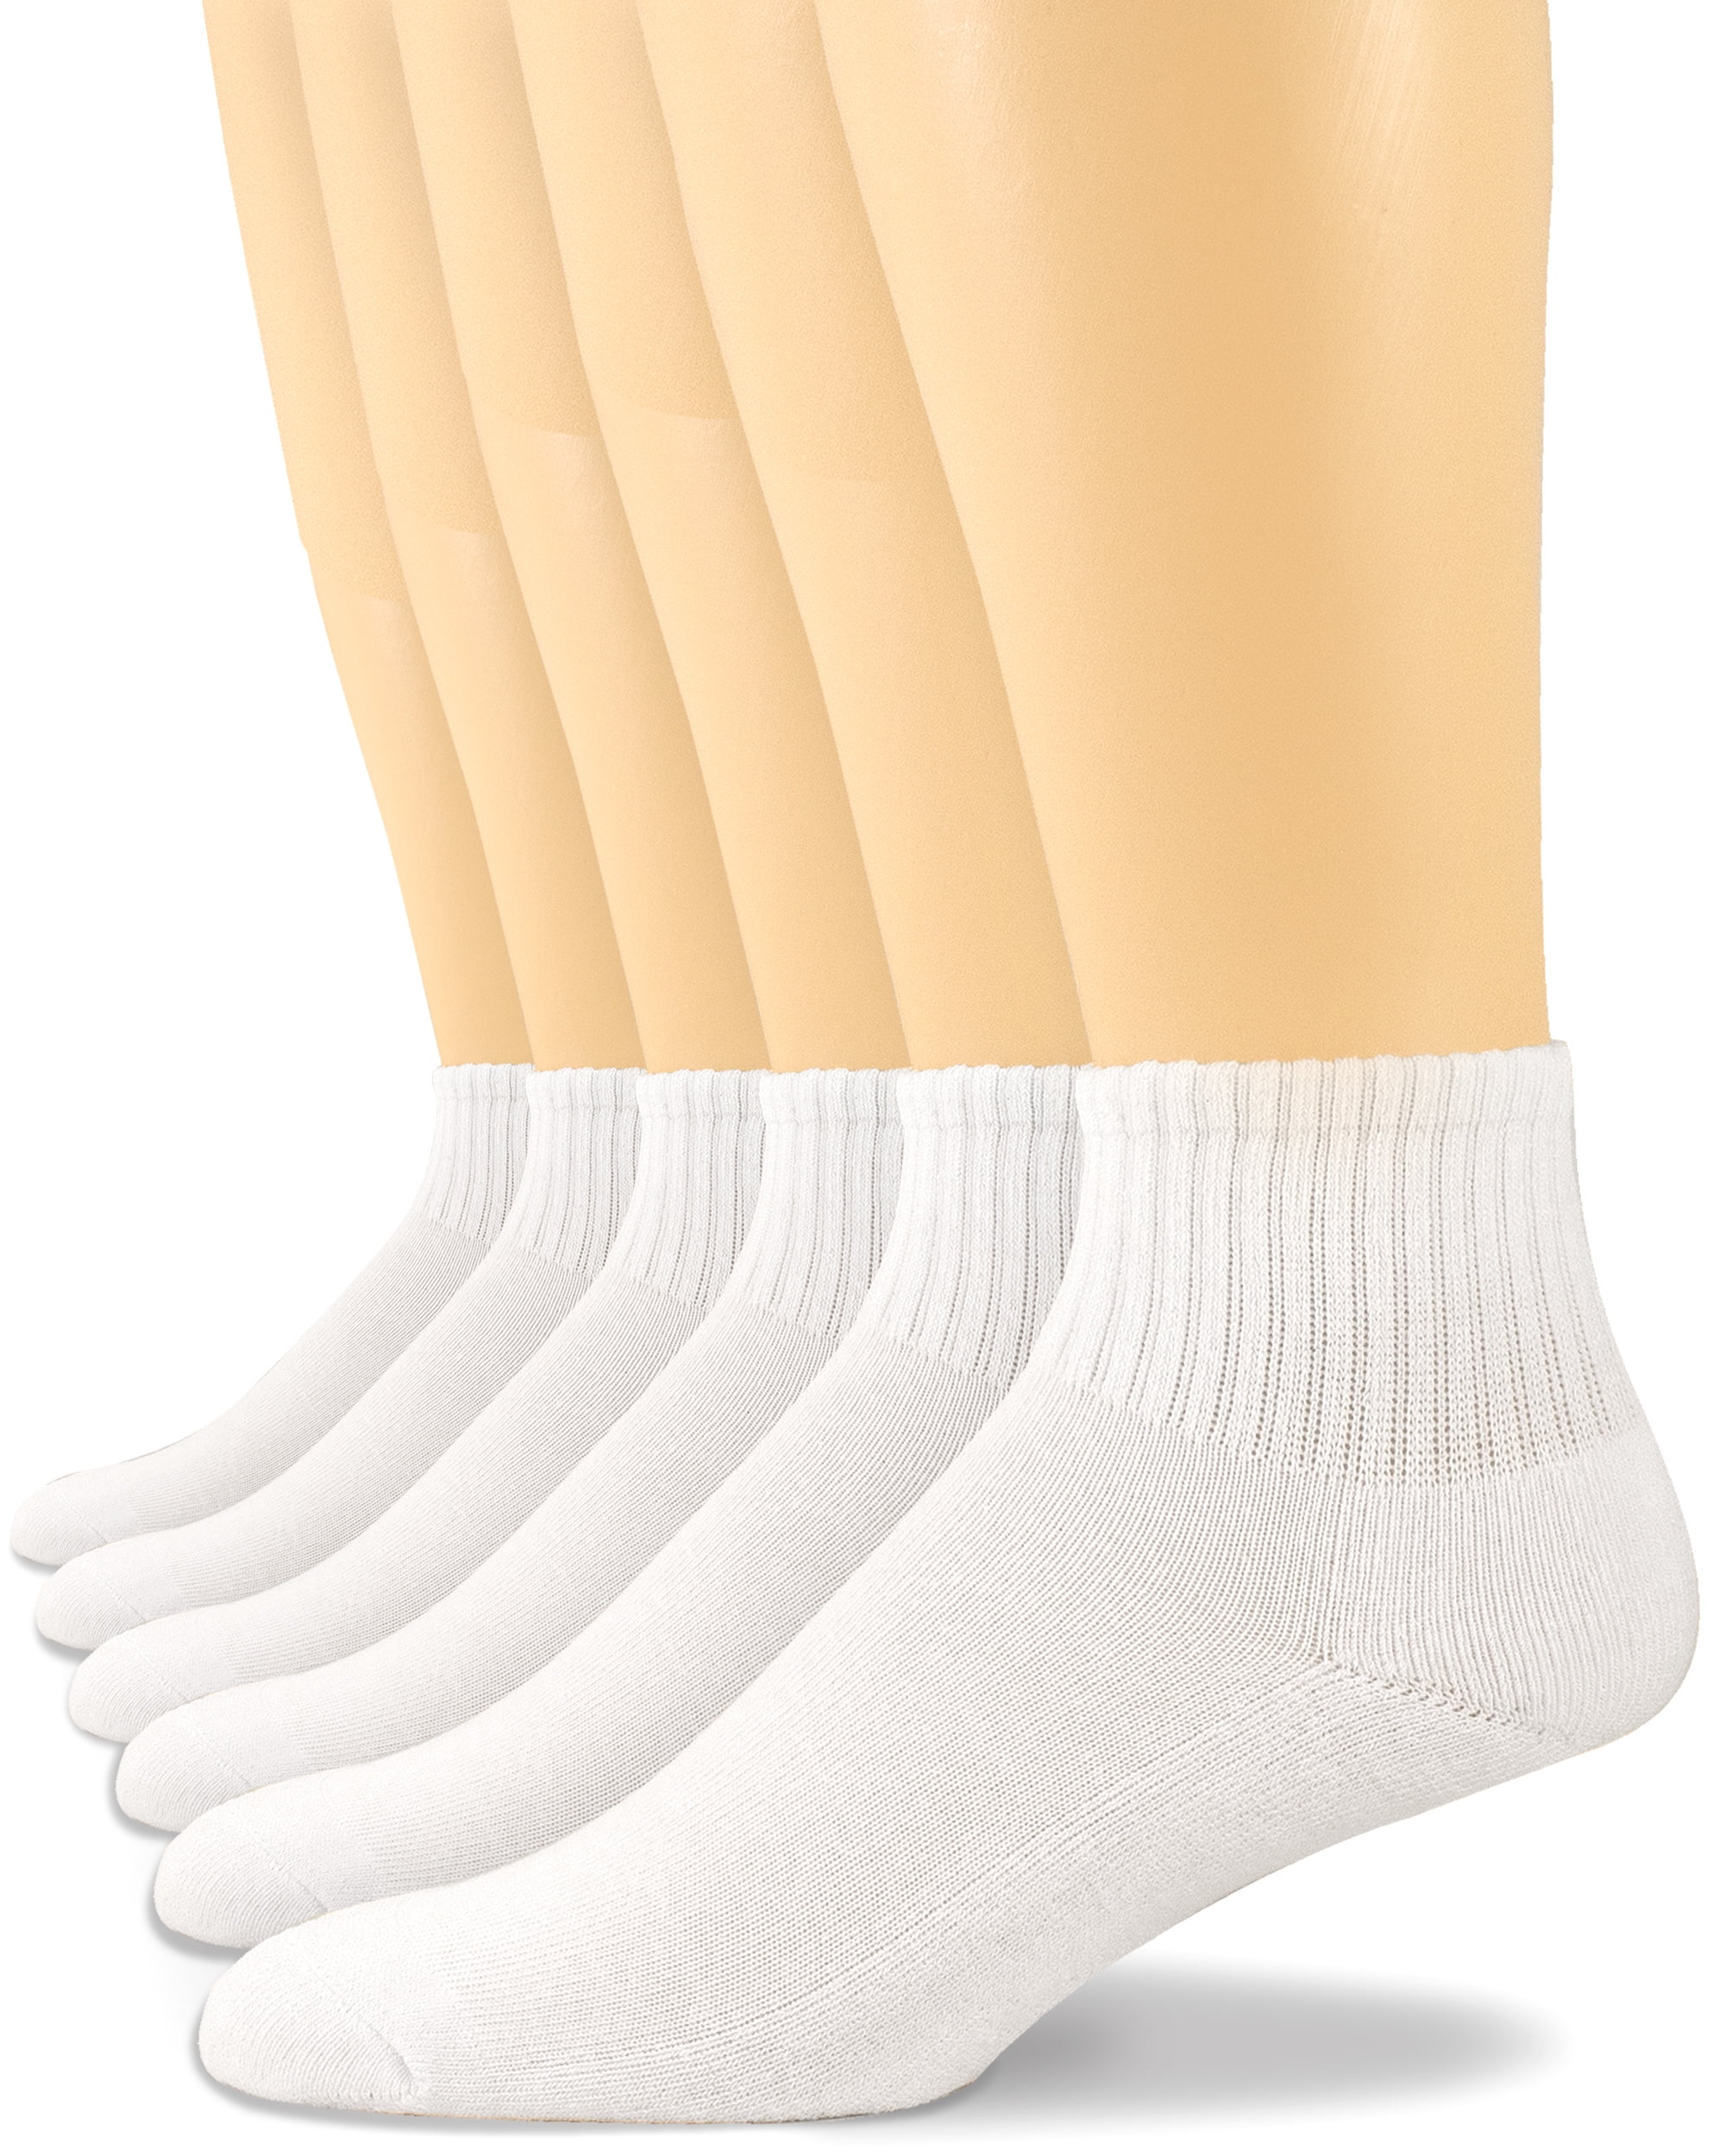 6 Pack Men's Ankle Cotton Athletic Running Sports Socks White Size 9-11 ...